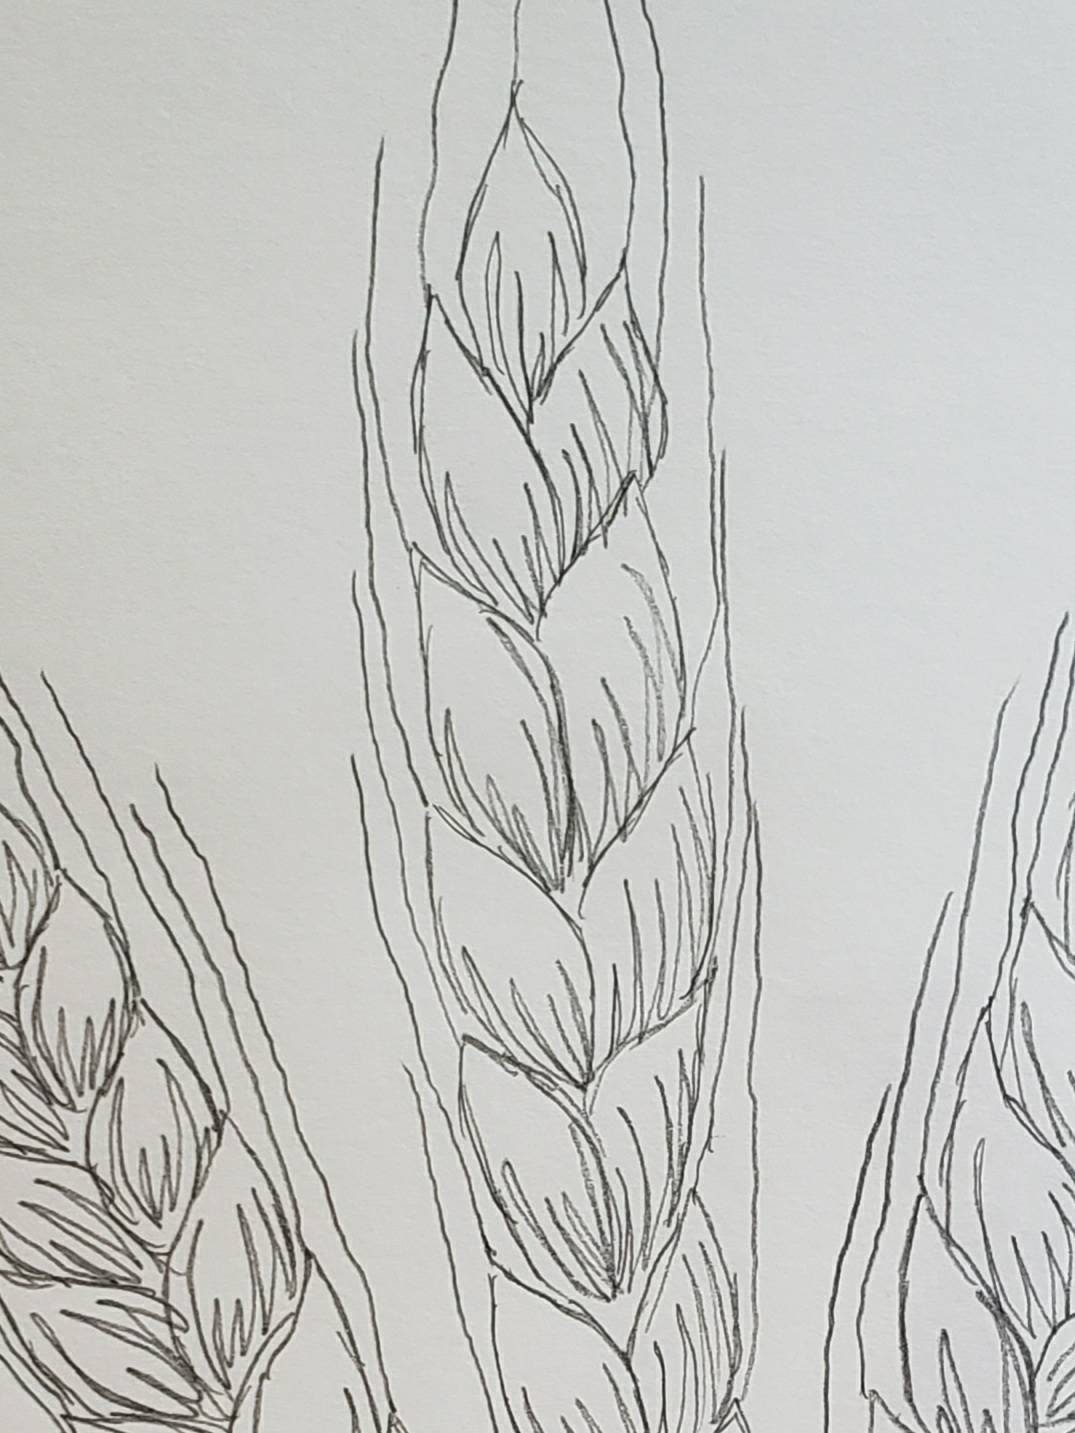 Wheat bread ears cereal crop sketch hand drawn Vector Image